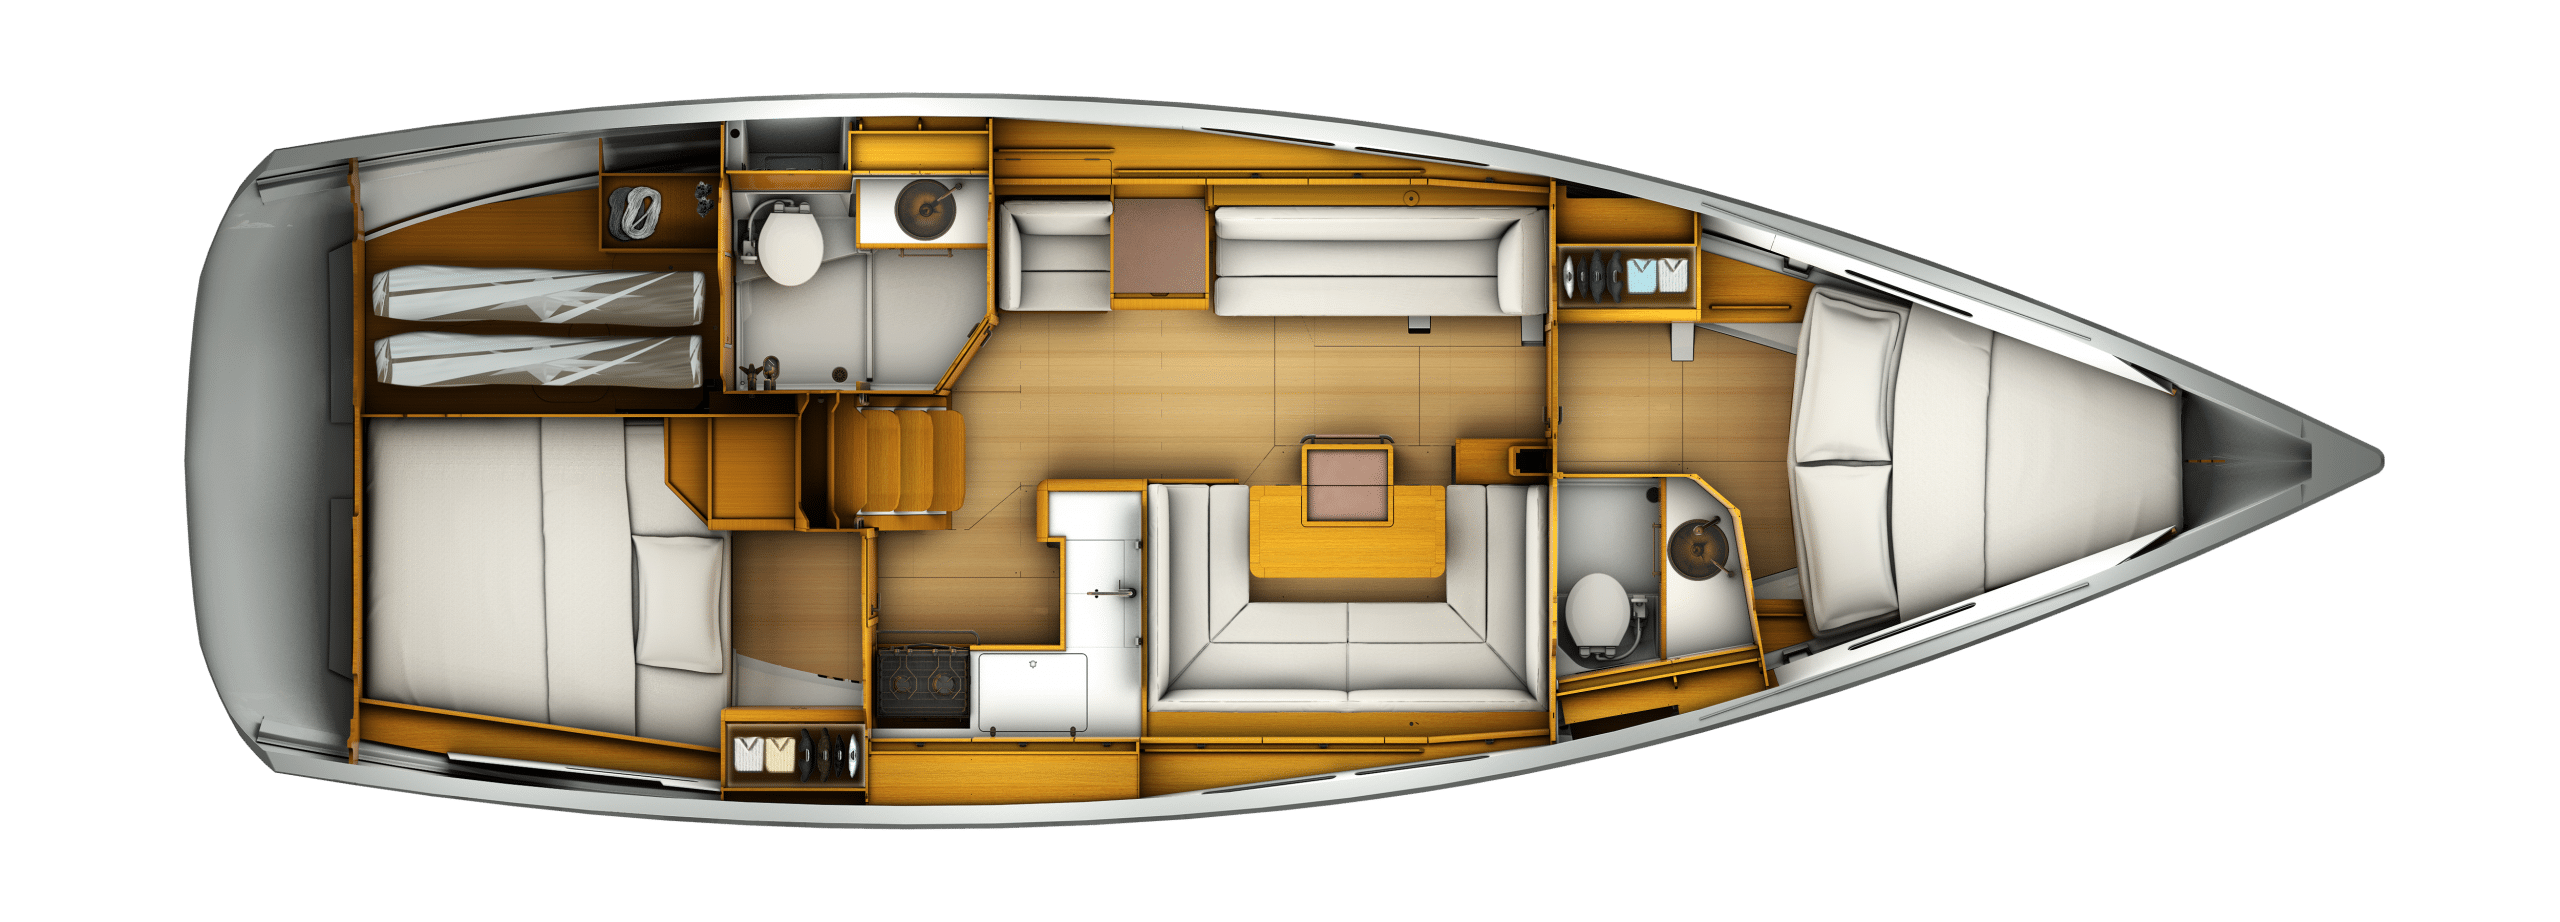 jeanneau-sun-odyssey-419-layout-2-cabins-2-heads